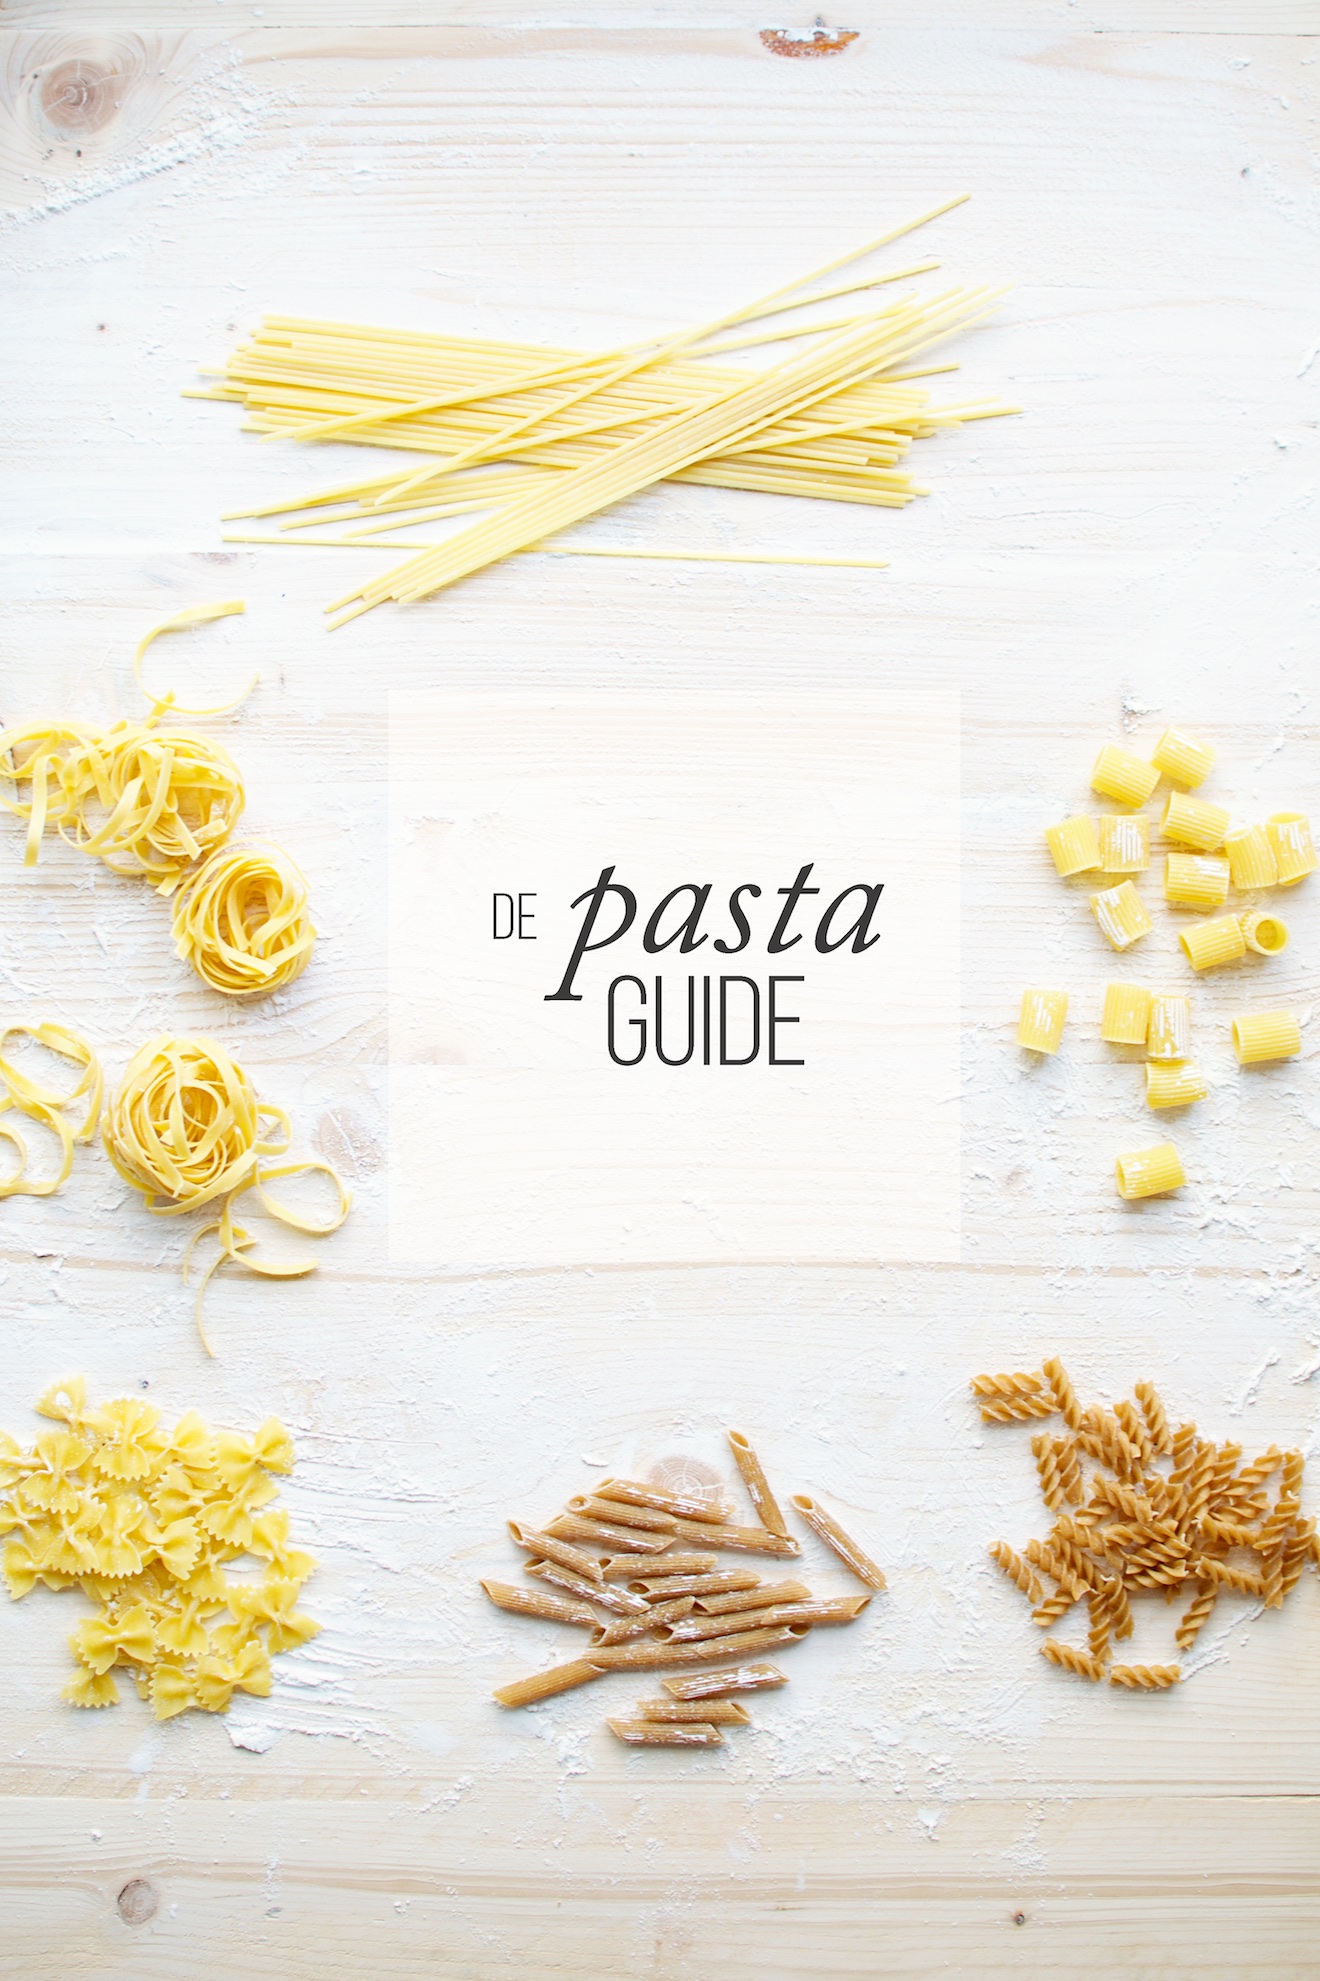 Hoe kies je de juiste pasta bij de saus